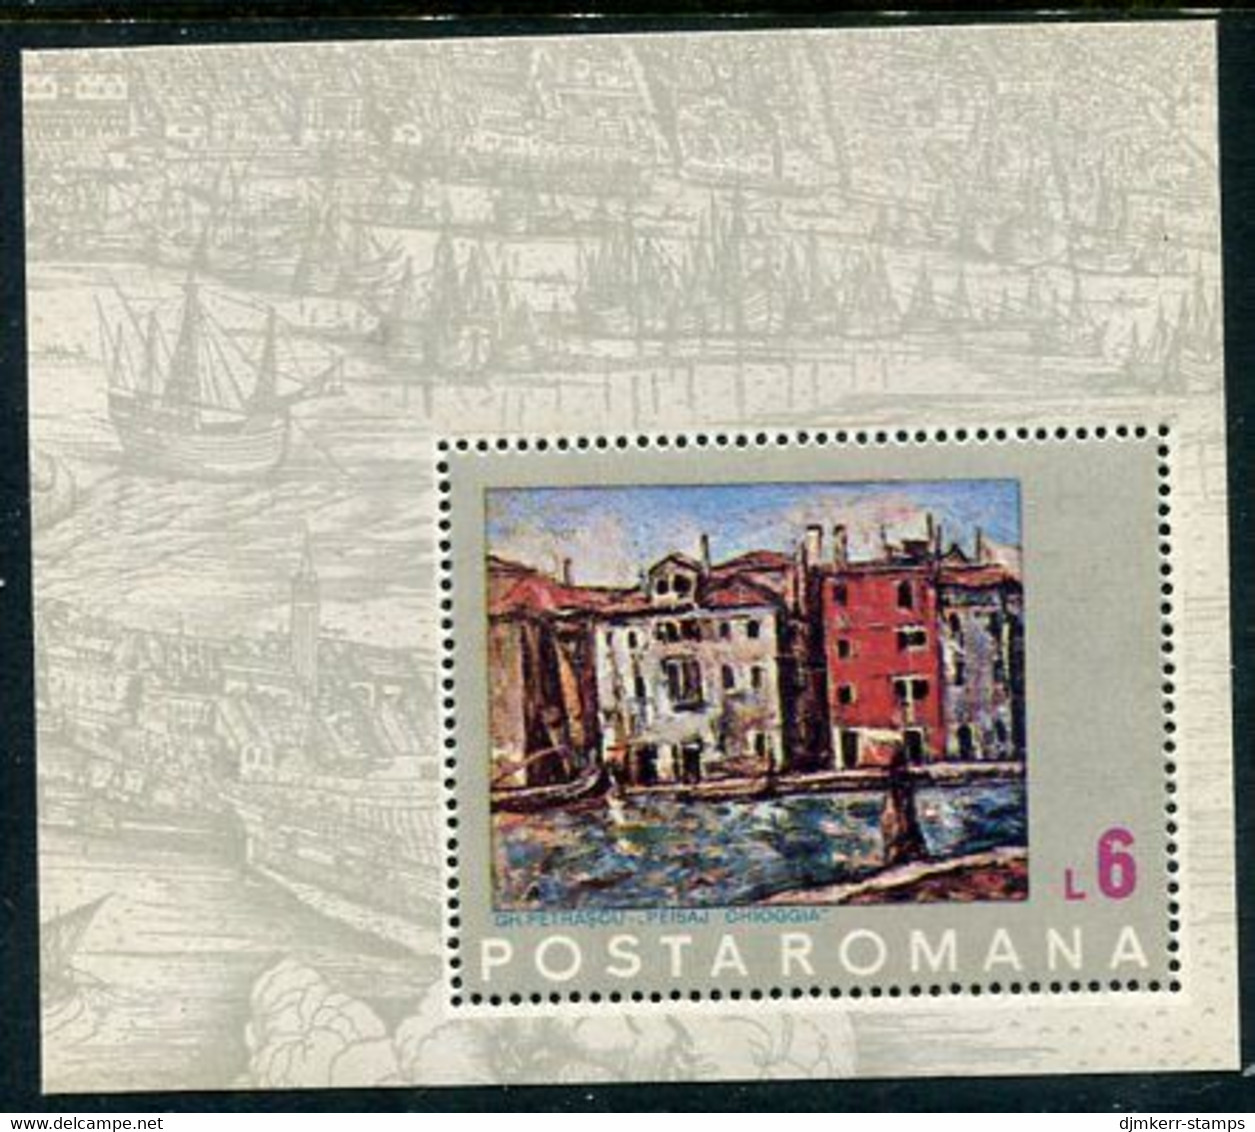 ROMANIA 1972 UNESCO Save Venice Block MNH / **.  Michel Block 99 - Blokken & Velletjes